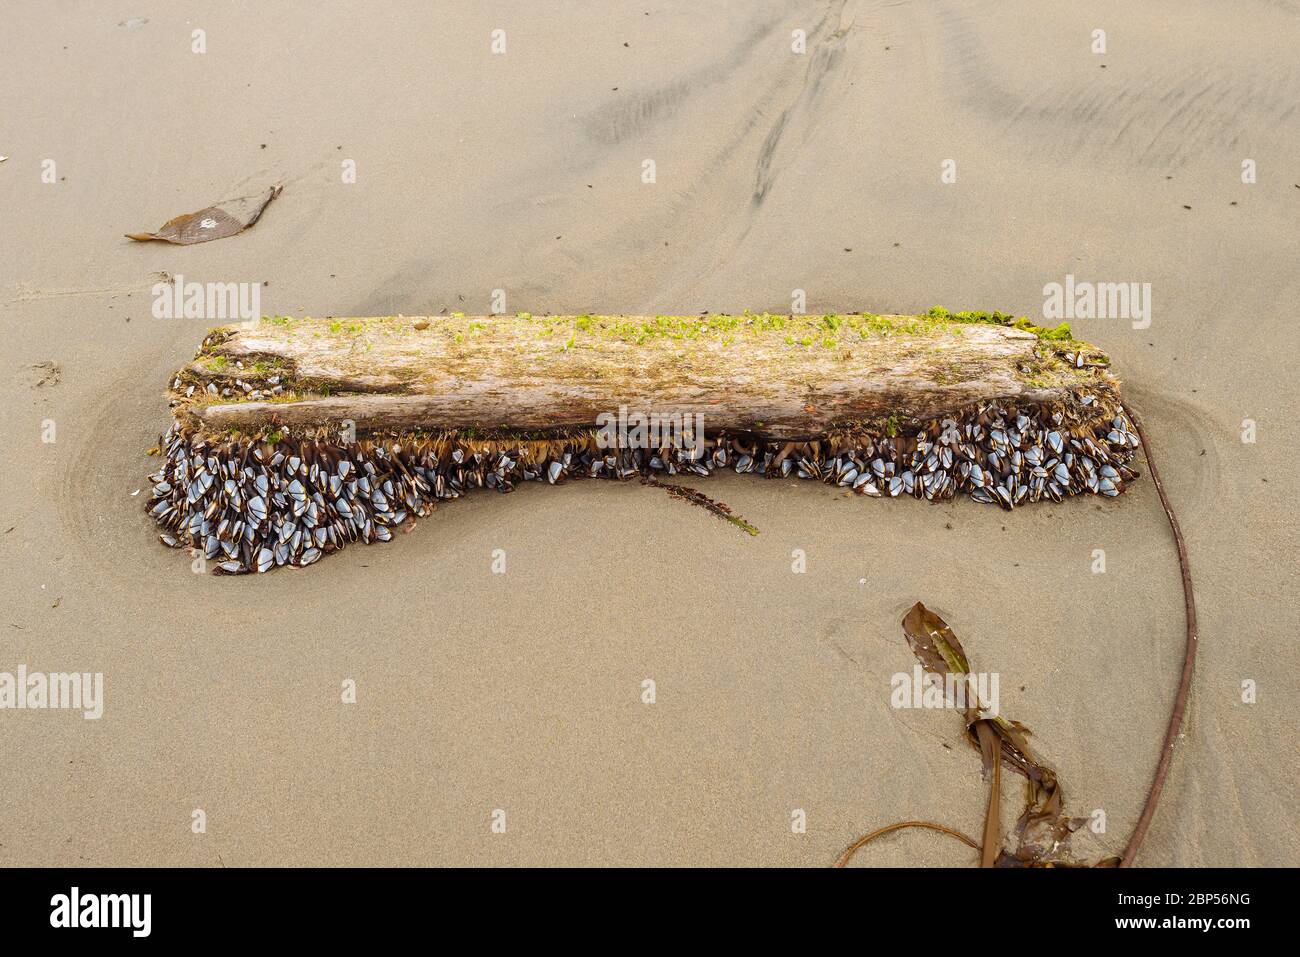 Lepas anatifera (pelagic goose barnacles) on a piece of driftwood in Naikoon Provincial Park, Haida Gwaii, British Columbia Stock Photo